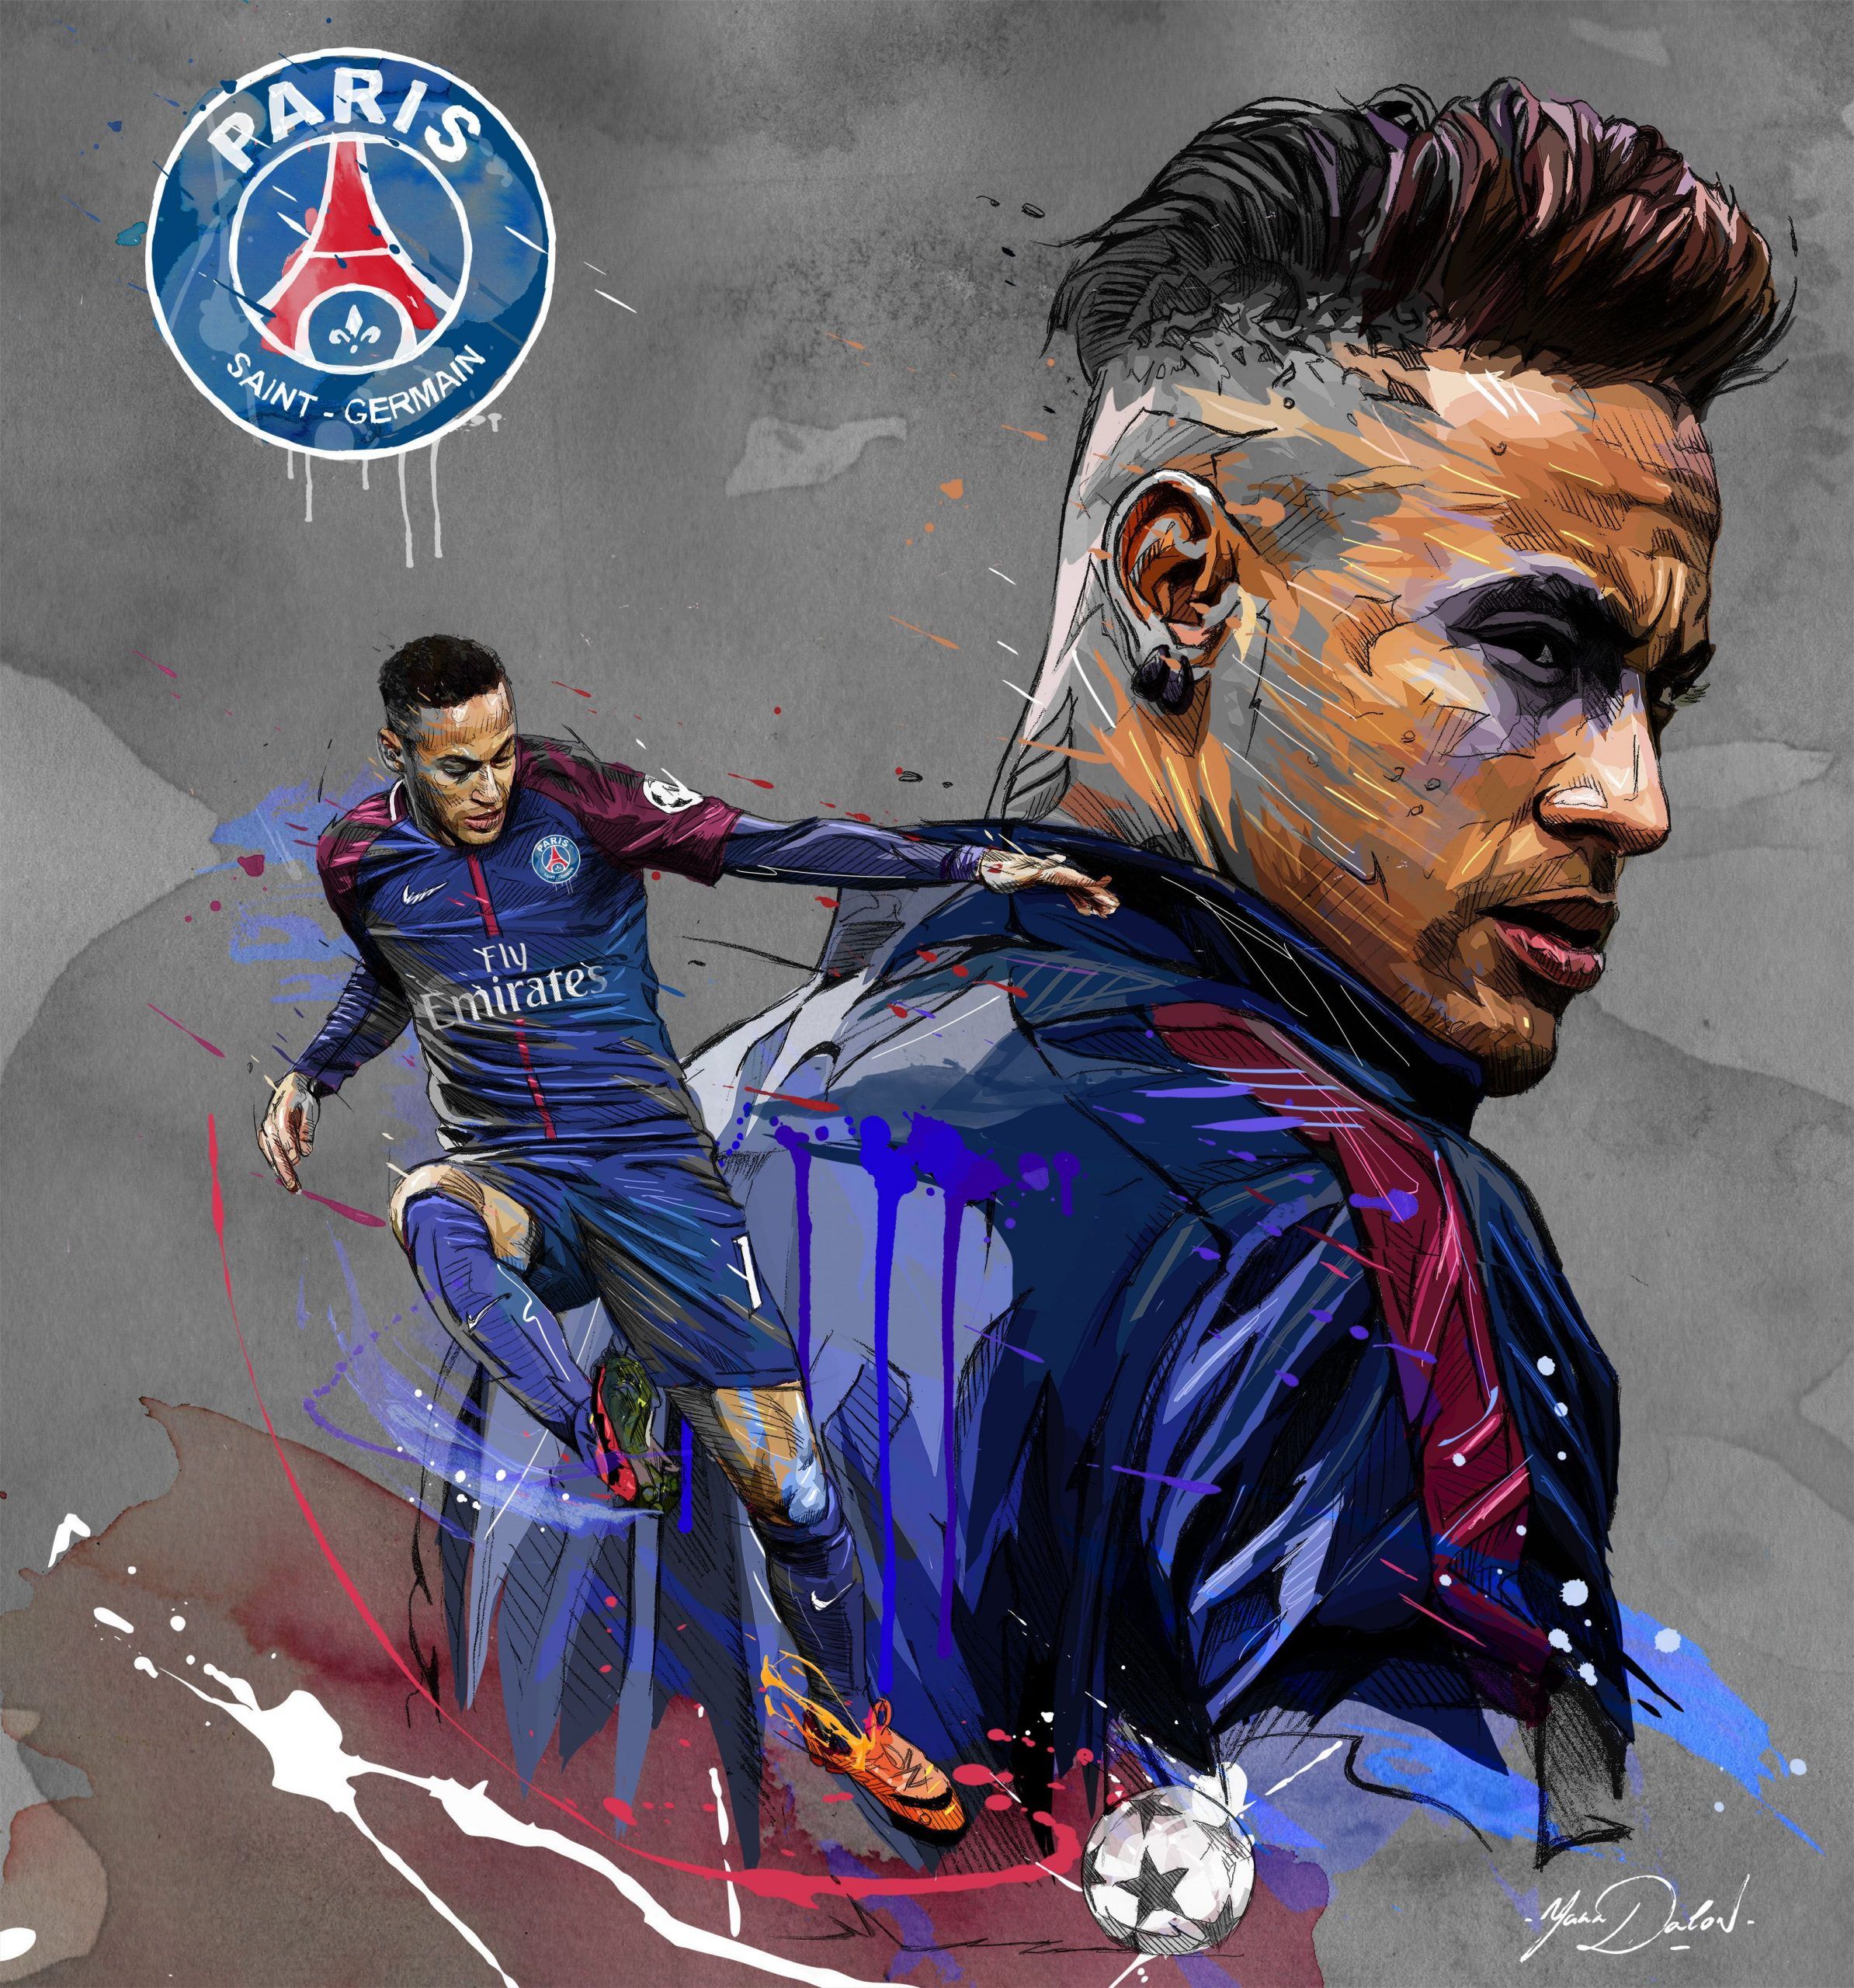 Neymar Jr. Wallpaper HD 2020 Football Lovers